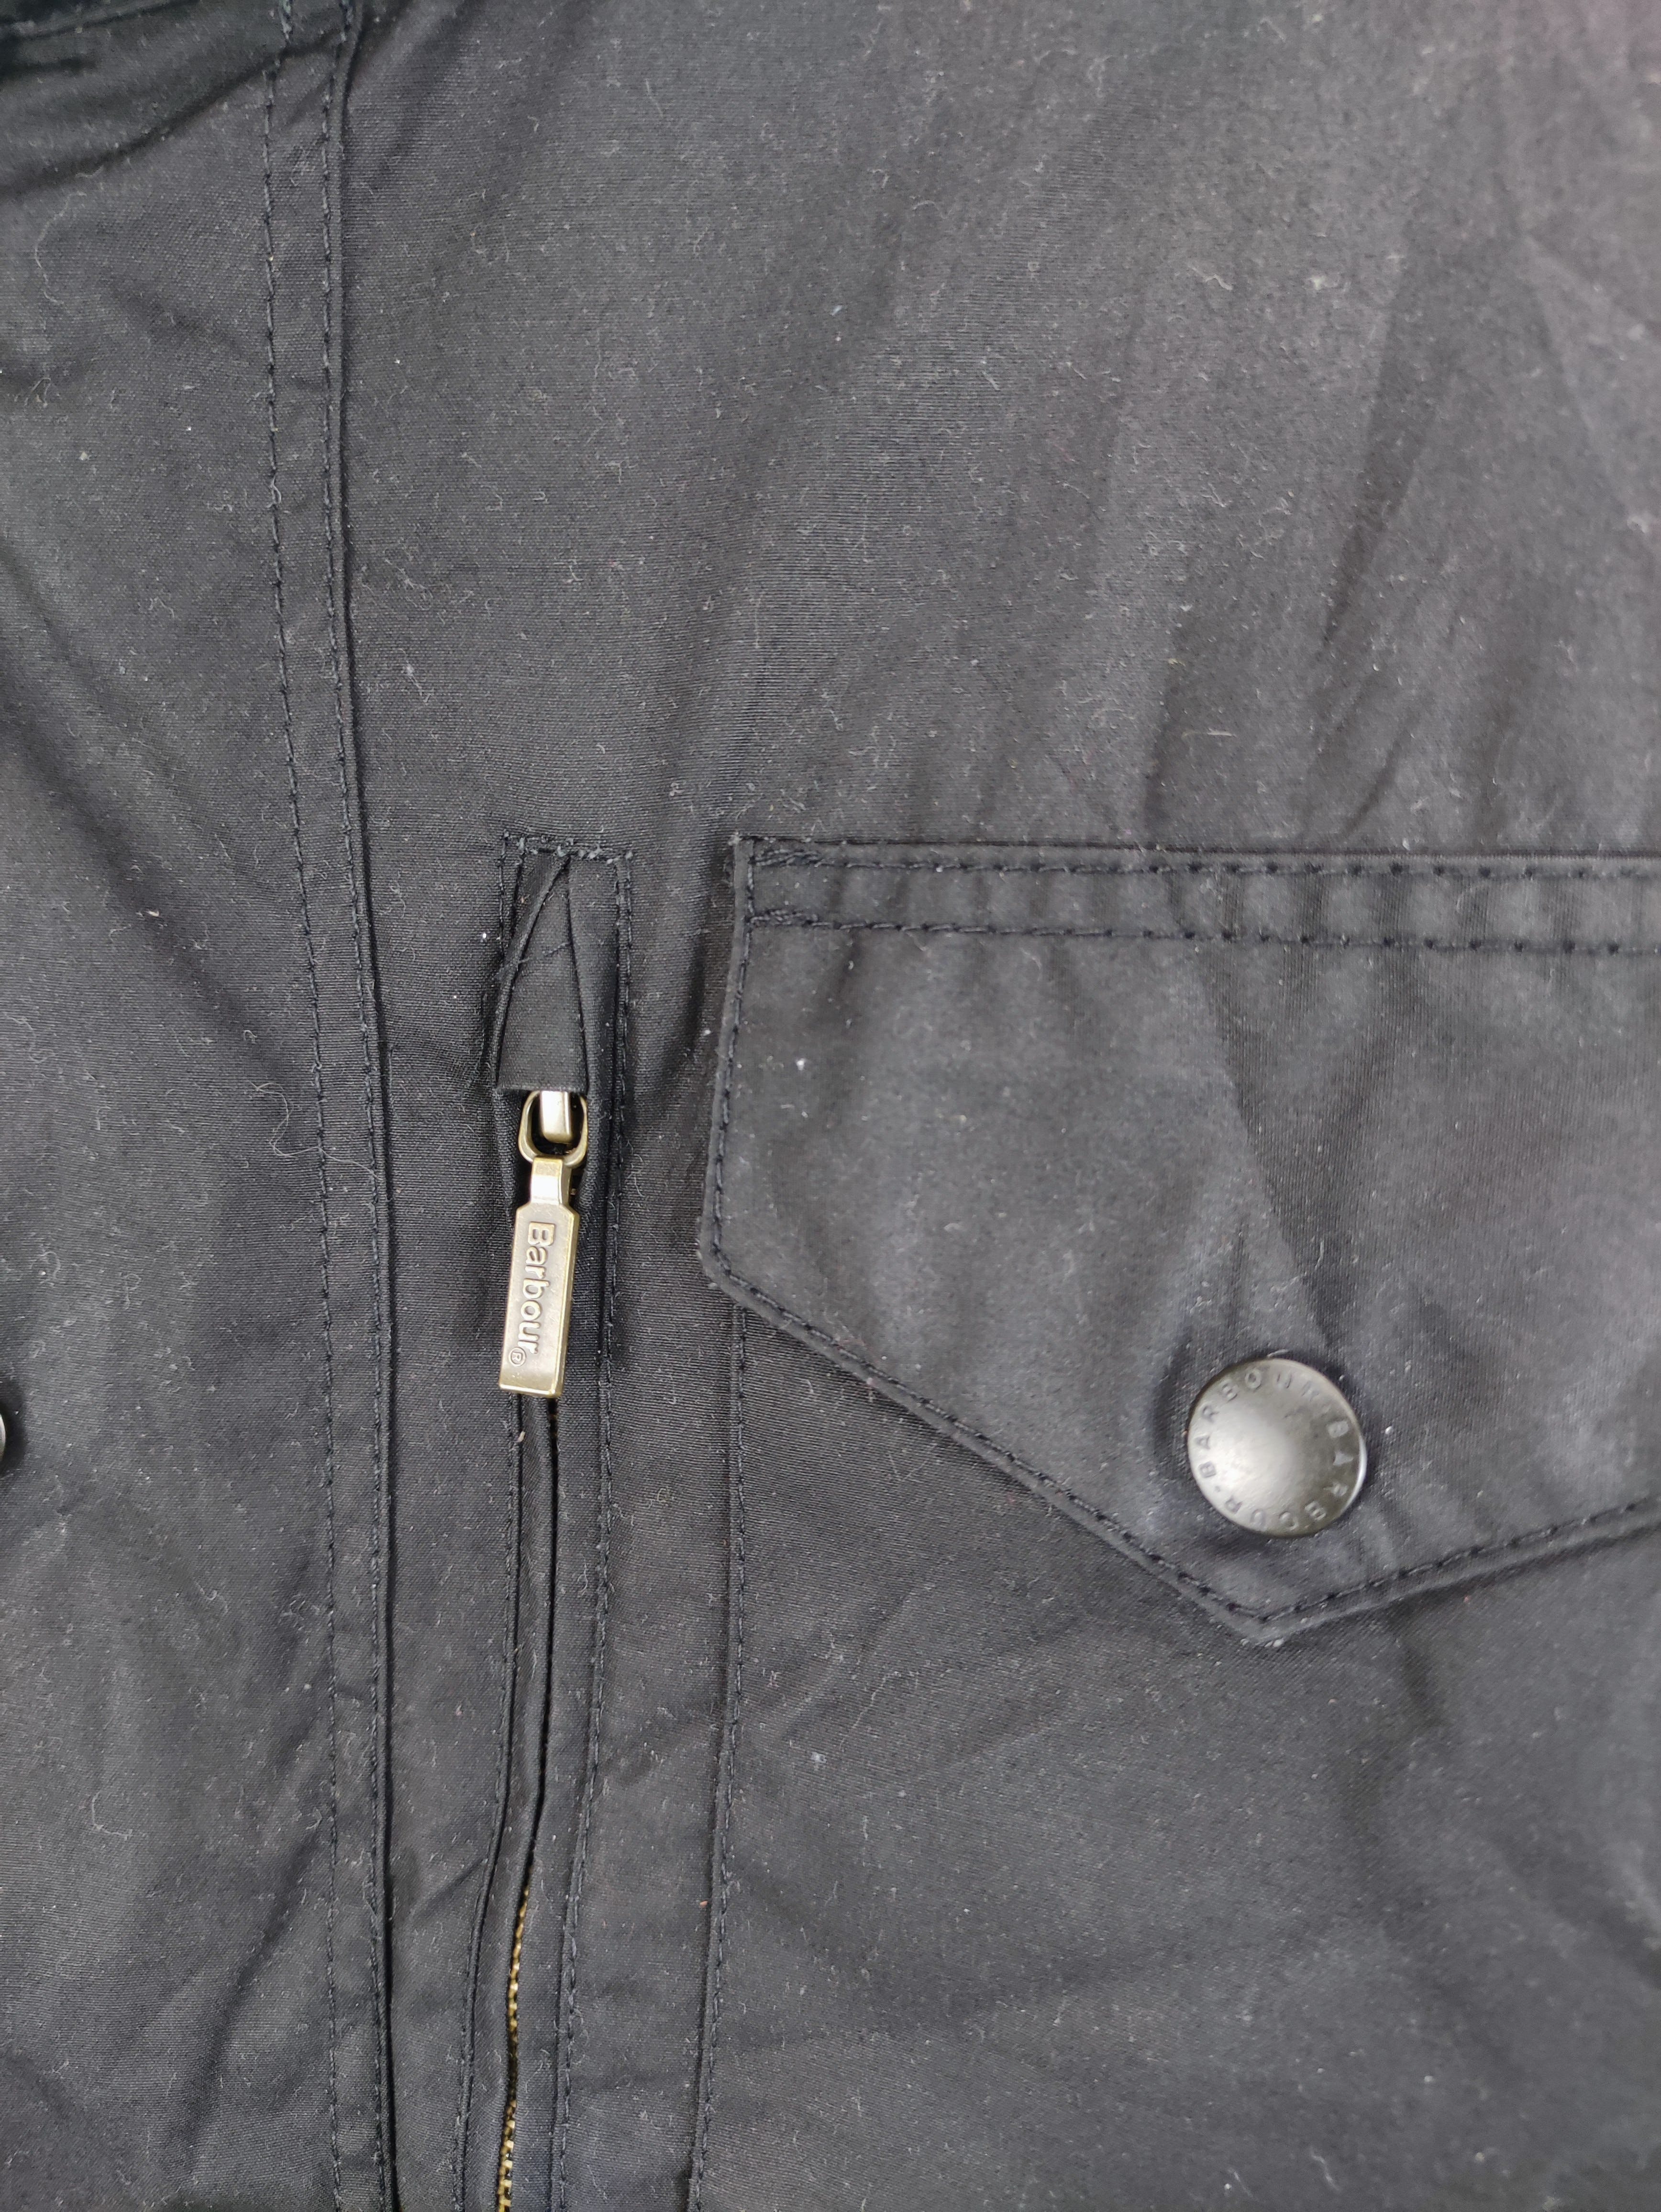 Vintage Barbour Jacket Zipper - 2